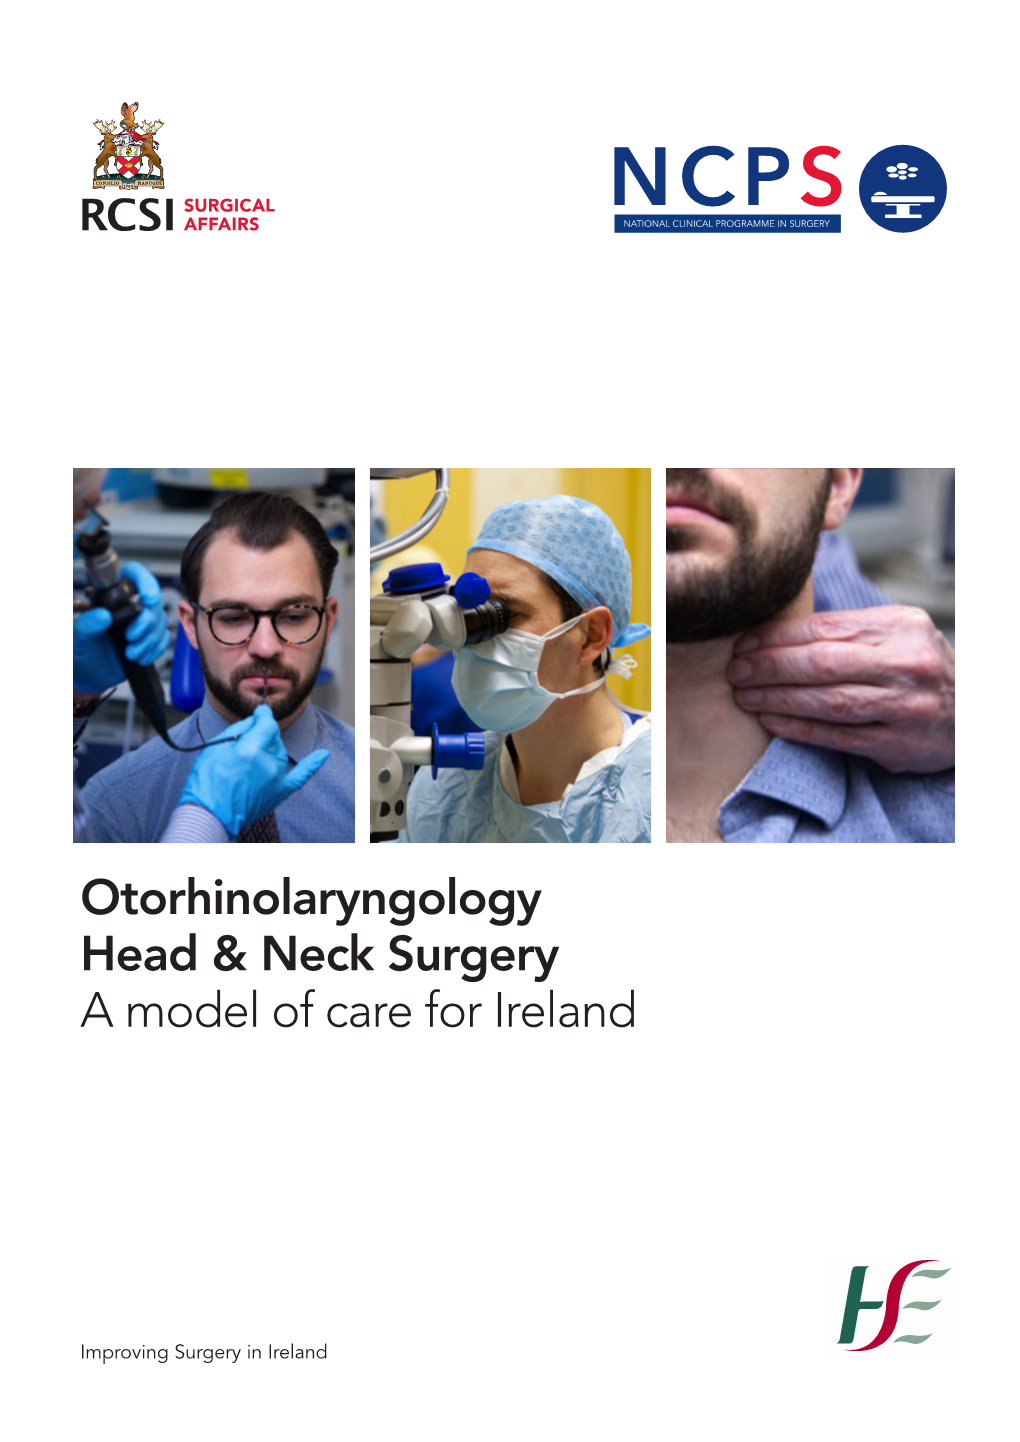 Otorhinolaryngology Head & Neck Surgery a Model of Care for Ireland